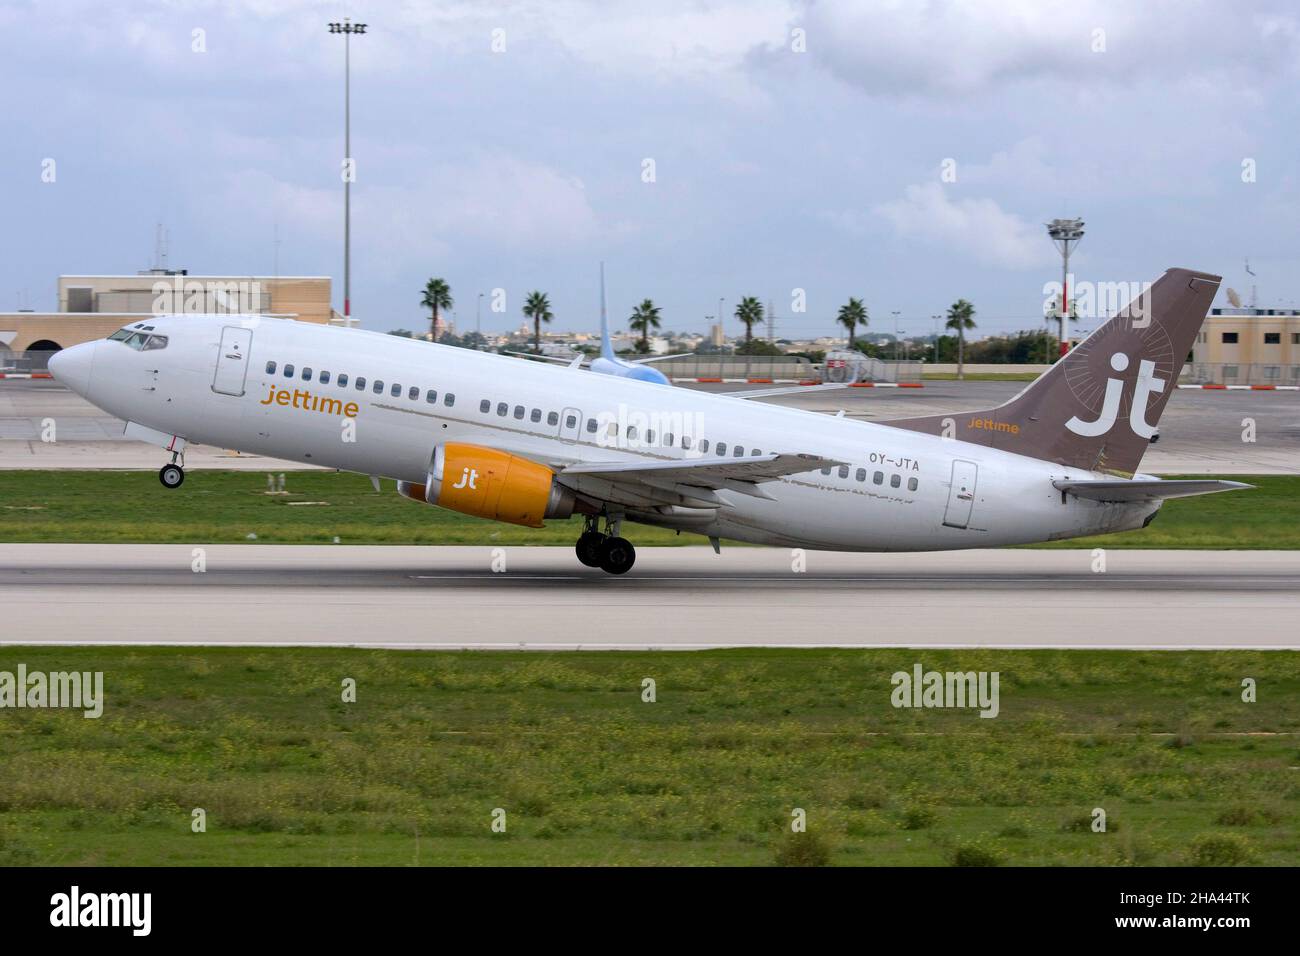 Jet Time Boeing 737-33A (Reg: OY-JTA) taking off runway 31. Stock Photo